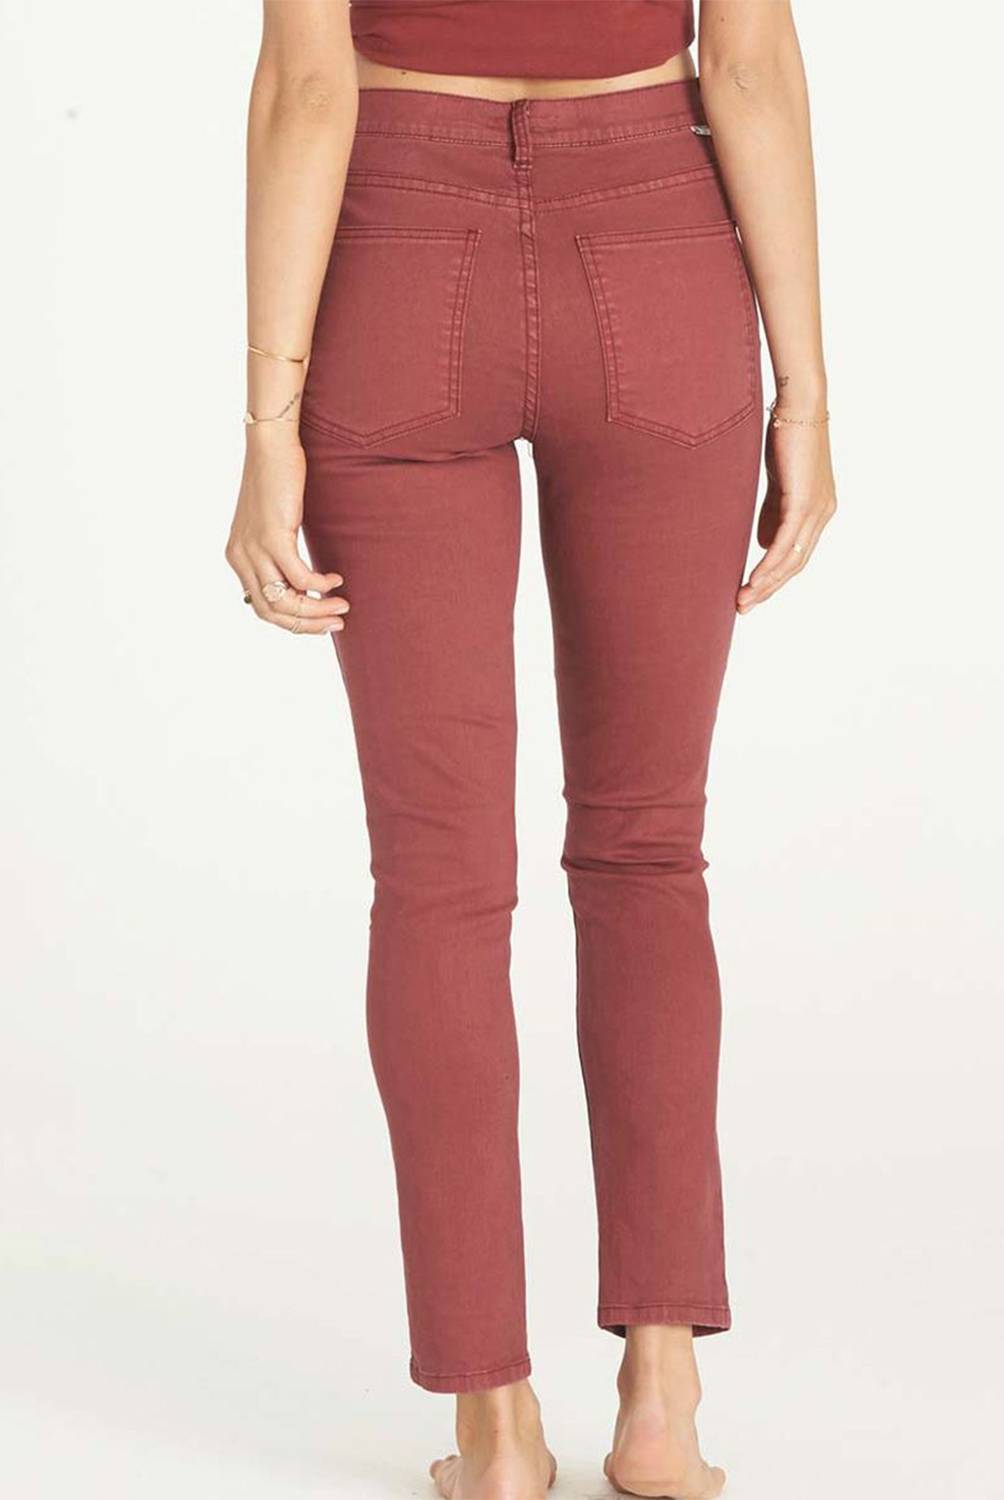 BILLABONG - Jeans Skinny Tiro Alto Mujer